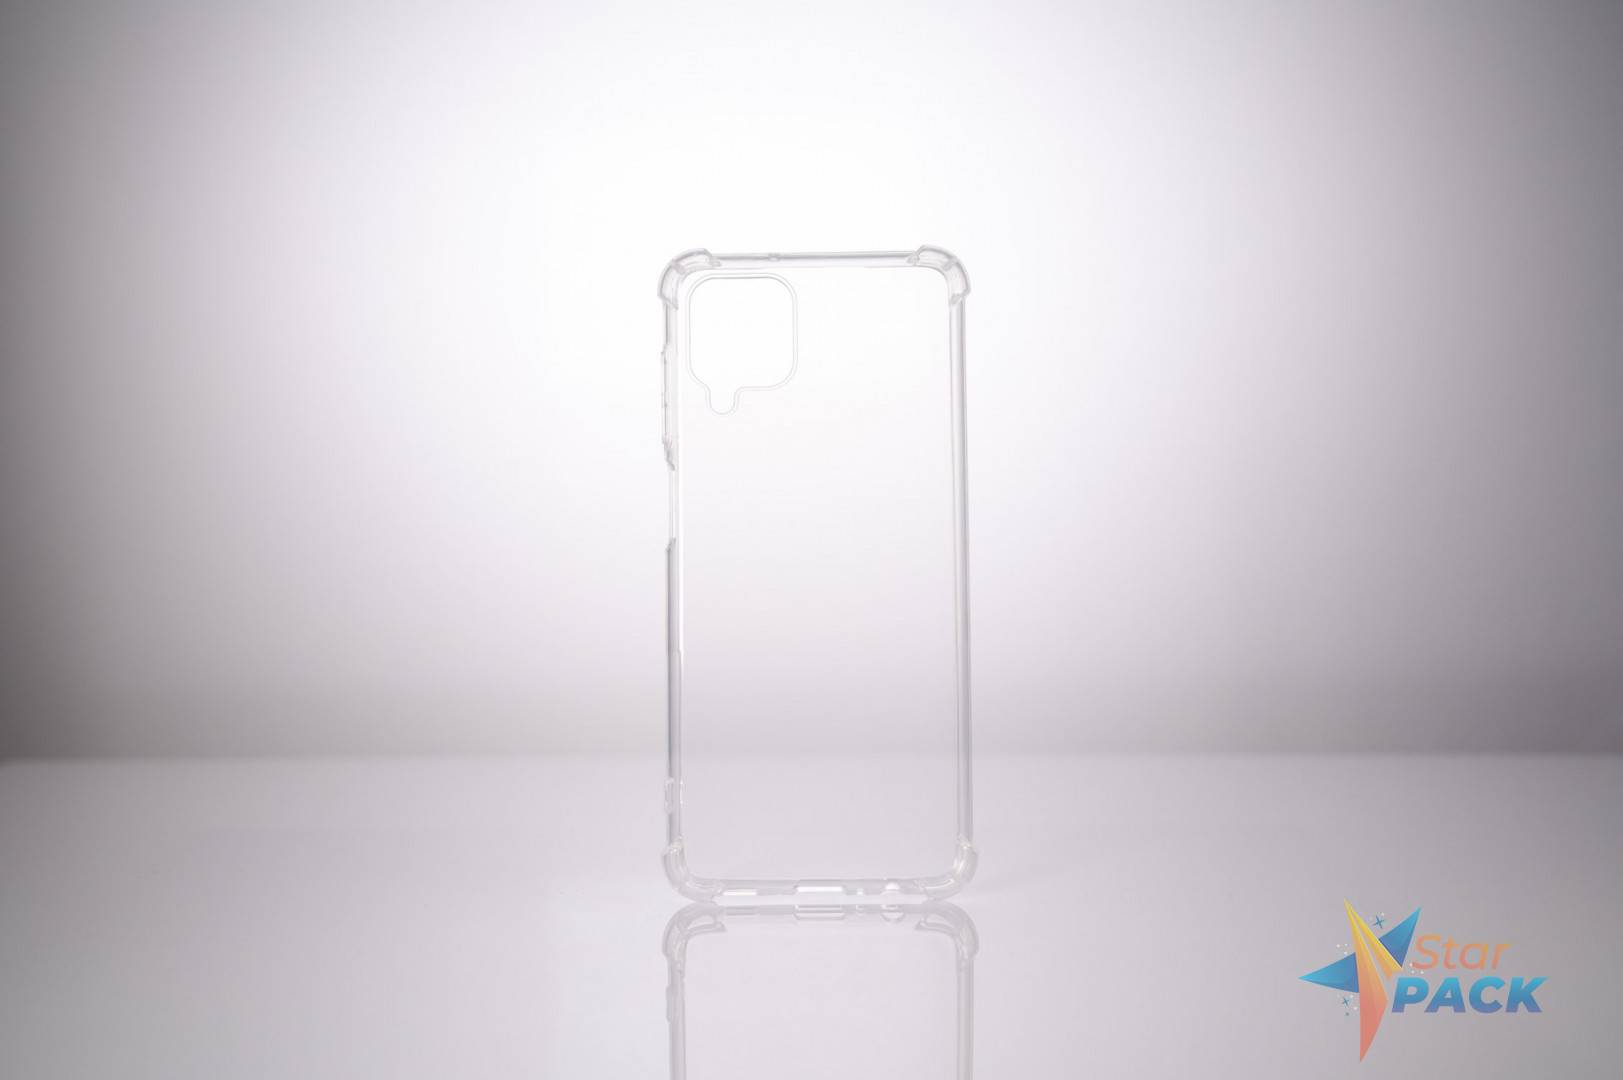 Husa Samsung Galaxy M12 Spacer, transparenta, grosime 1.5mm, protectie suplimentara antisoc la colturi, material flexibil TPU